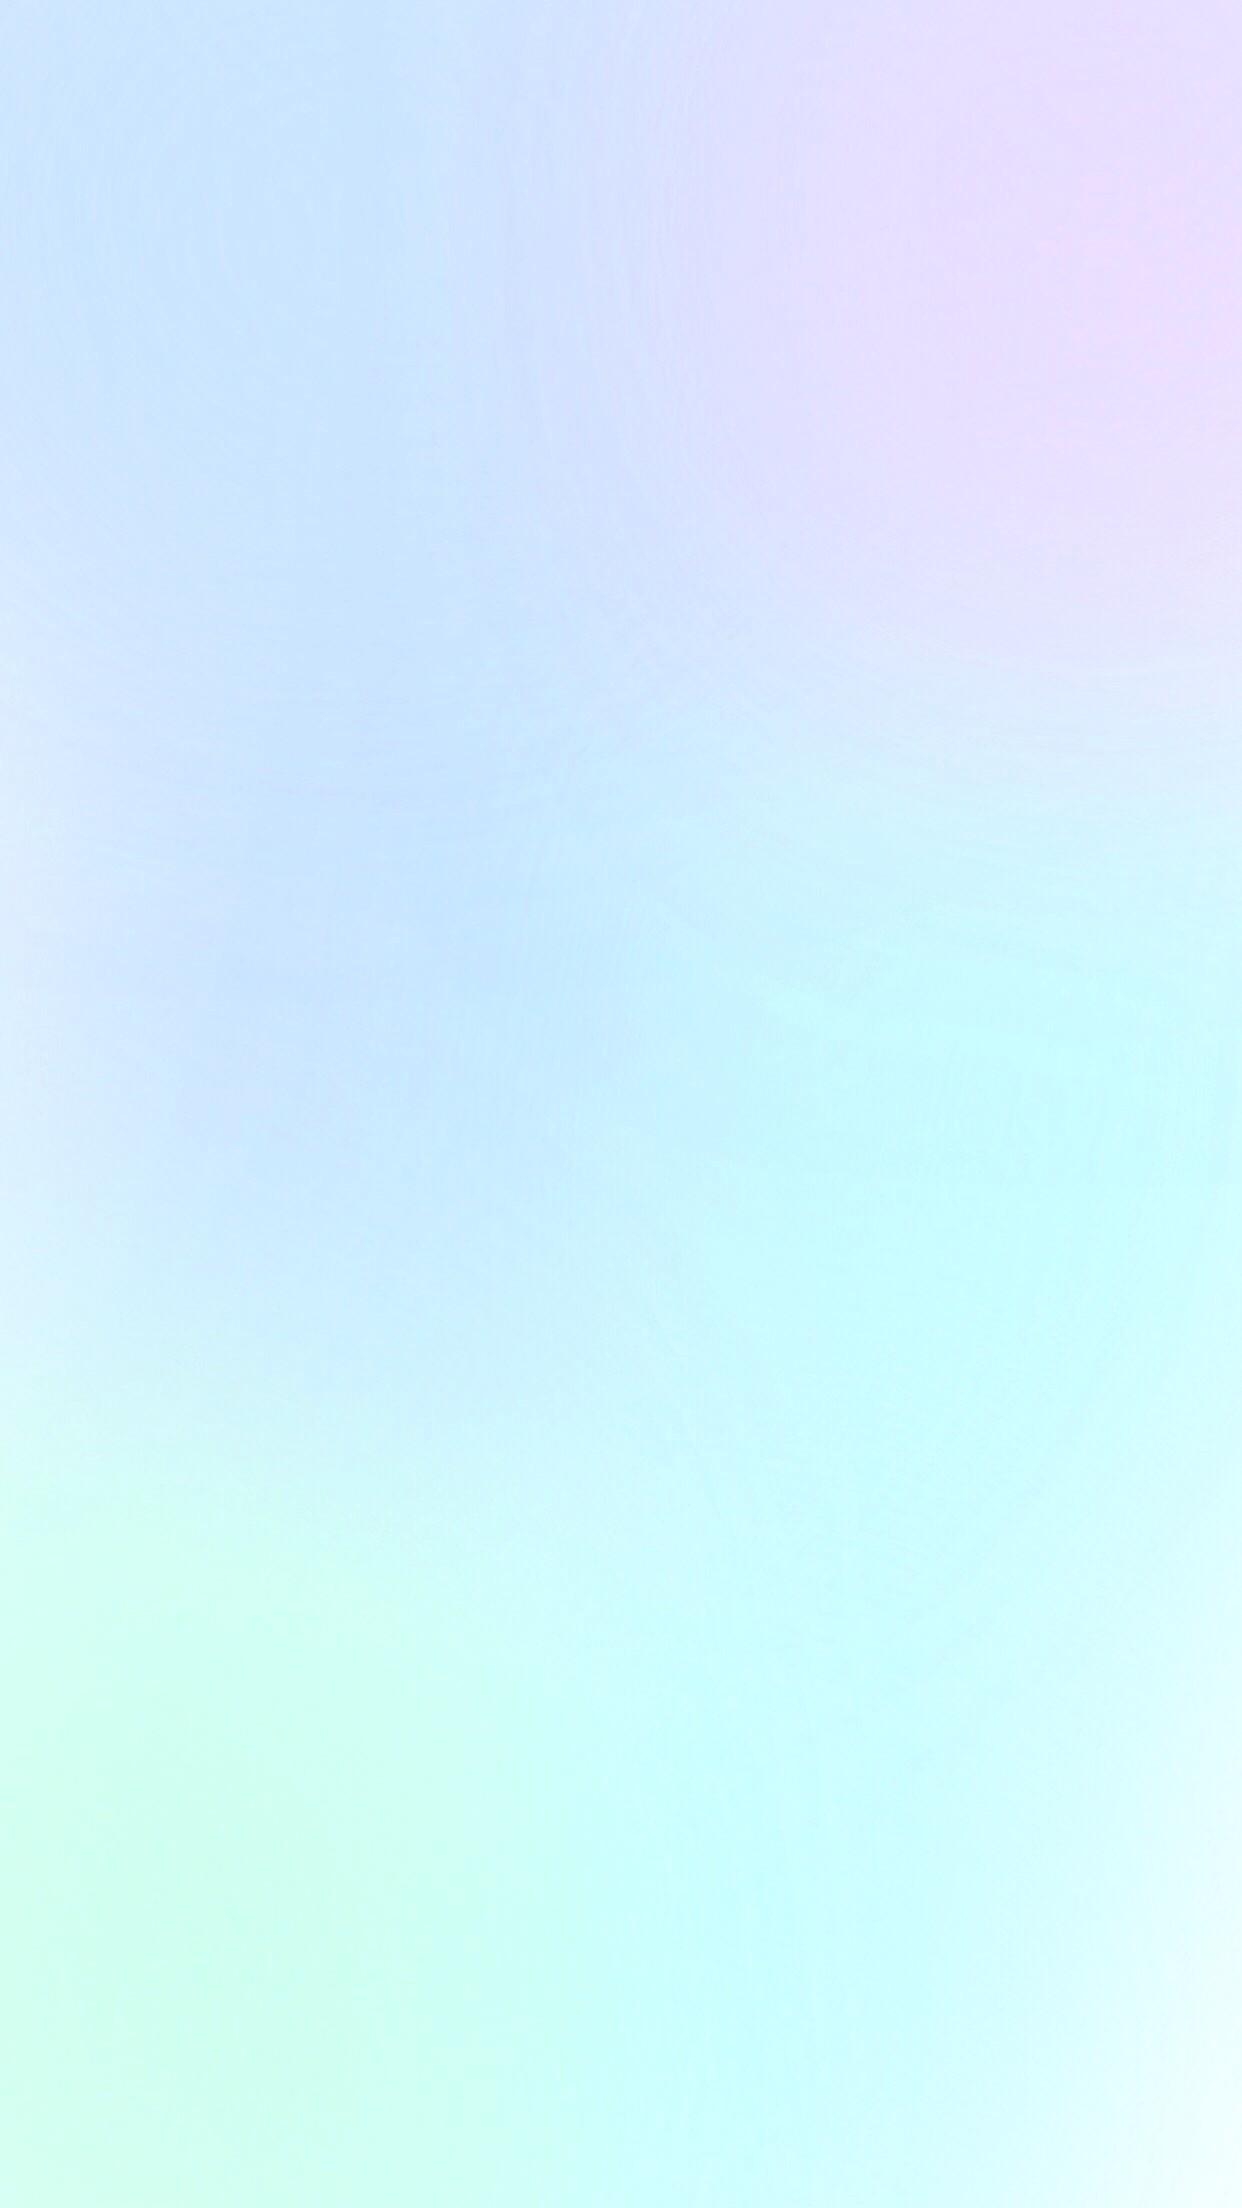 pastel color background